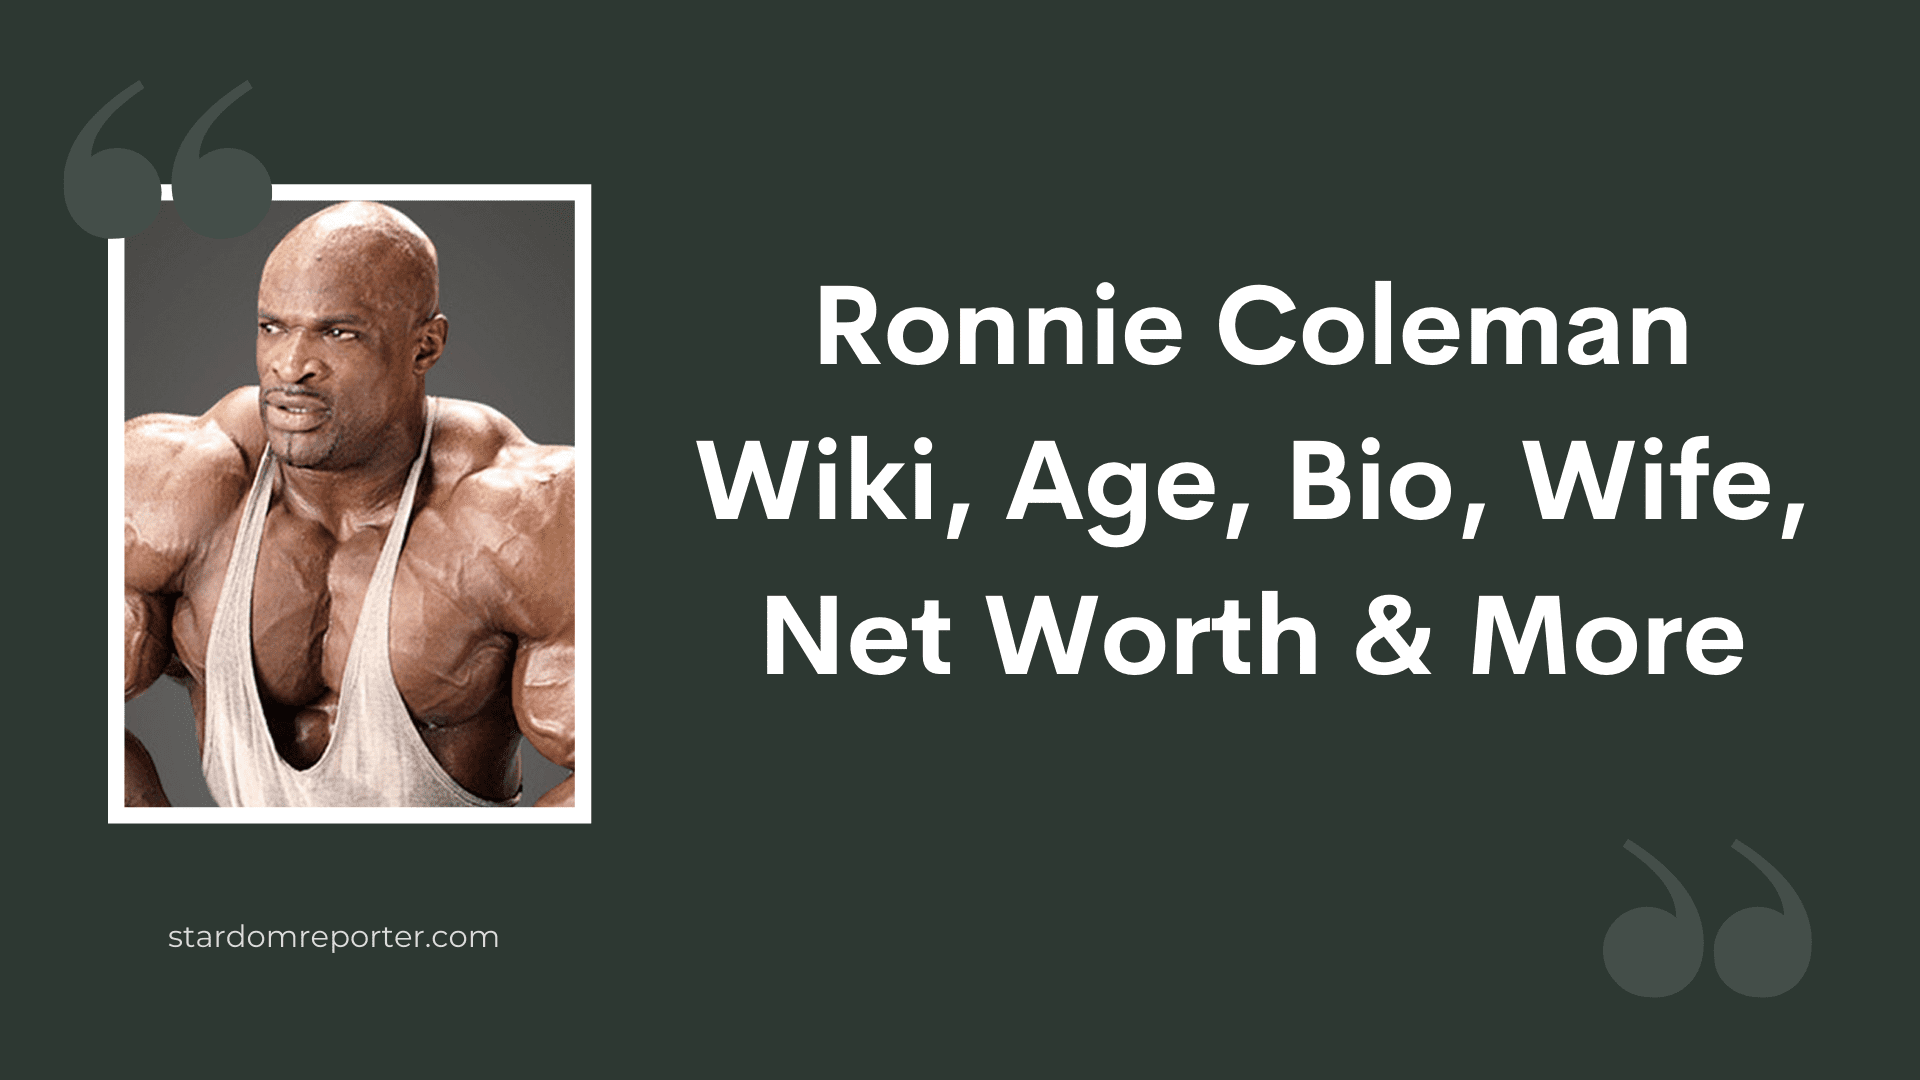 Ronnie Coleman Wiki, Age, Bio, Wife, Net Worth & More - 19